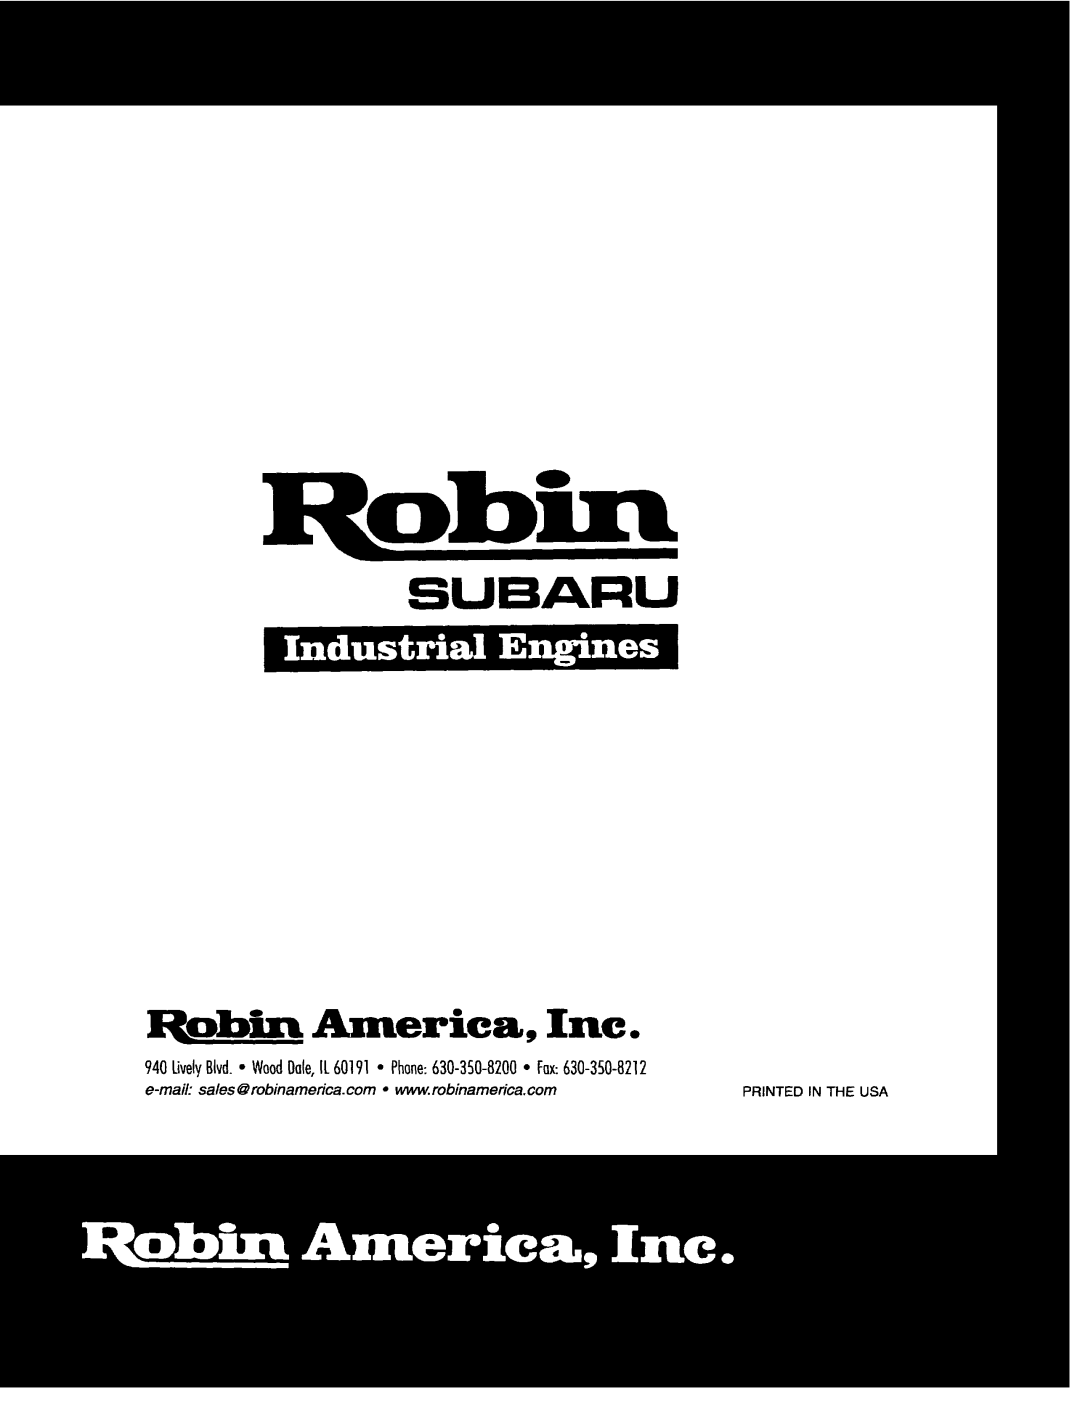 Subaru Robin Power Products EH12-2, EH17-2, EH25-2 manual ~bin America, Inc, SU6ARU, LivelyBlvd. l WoodDale,IL 60191 l 